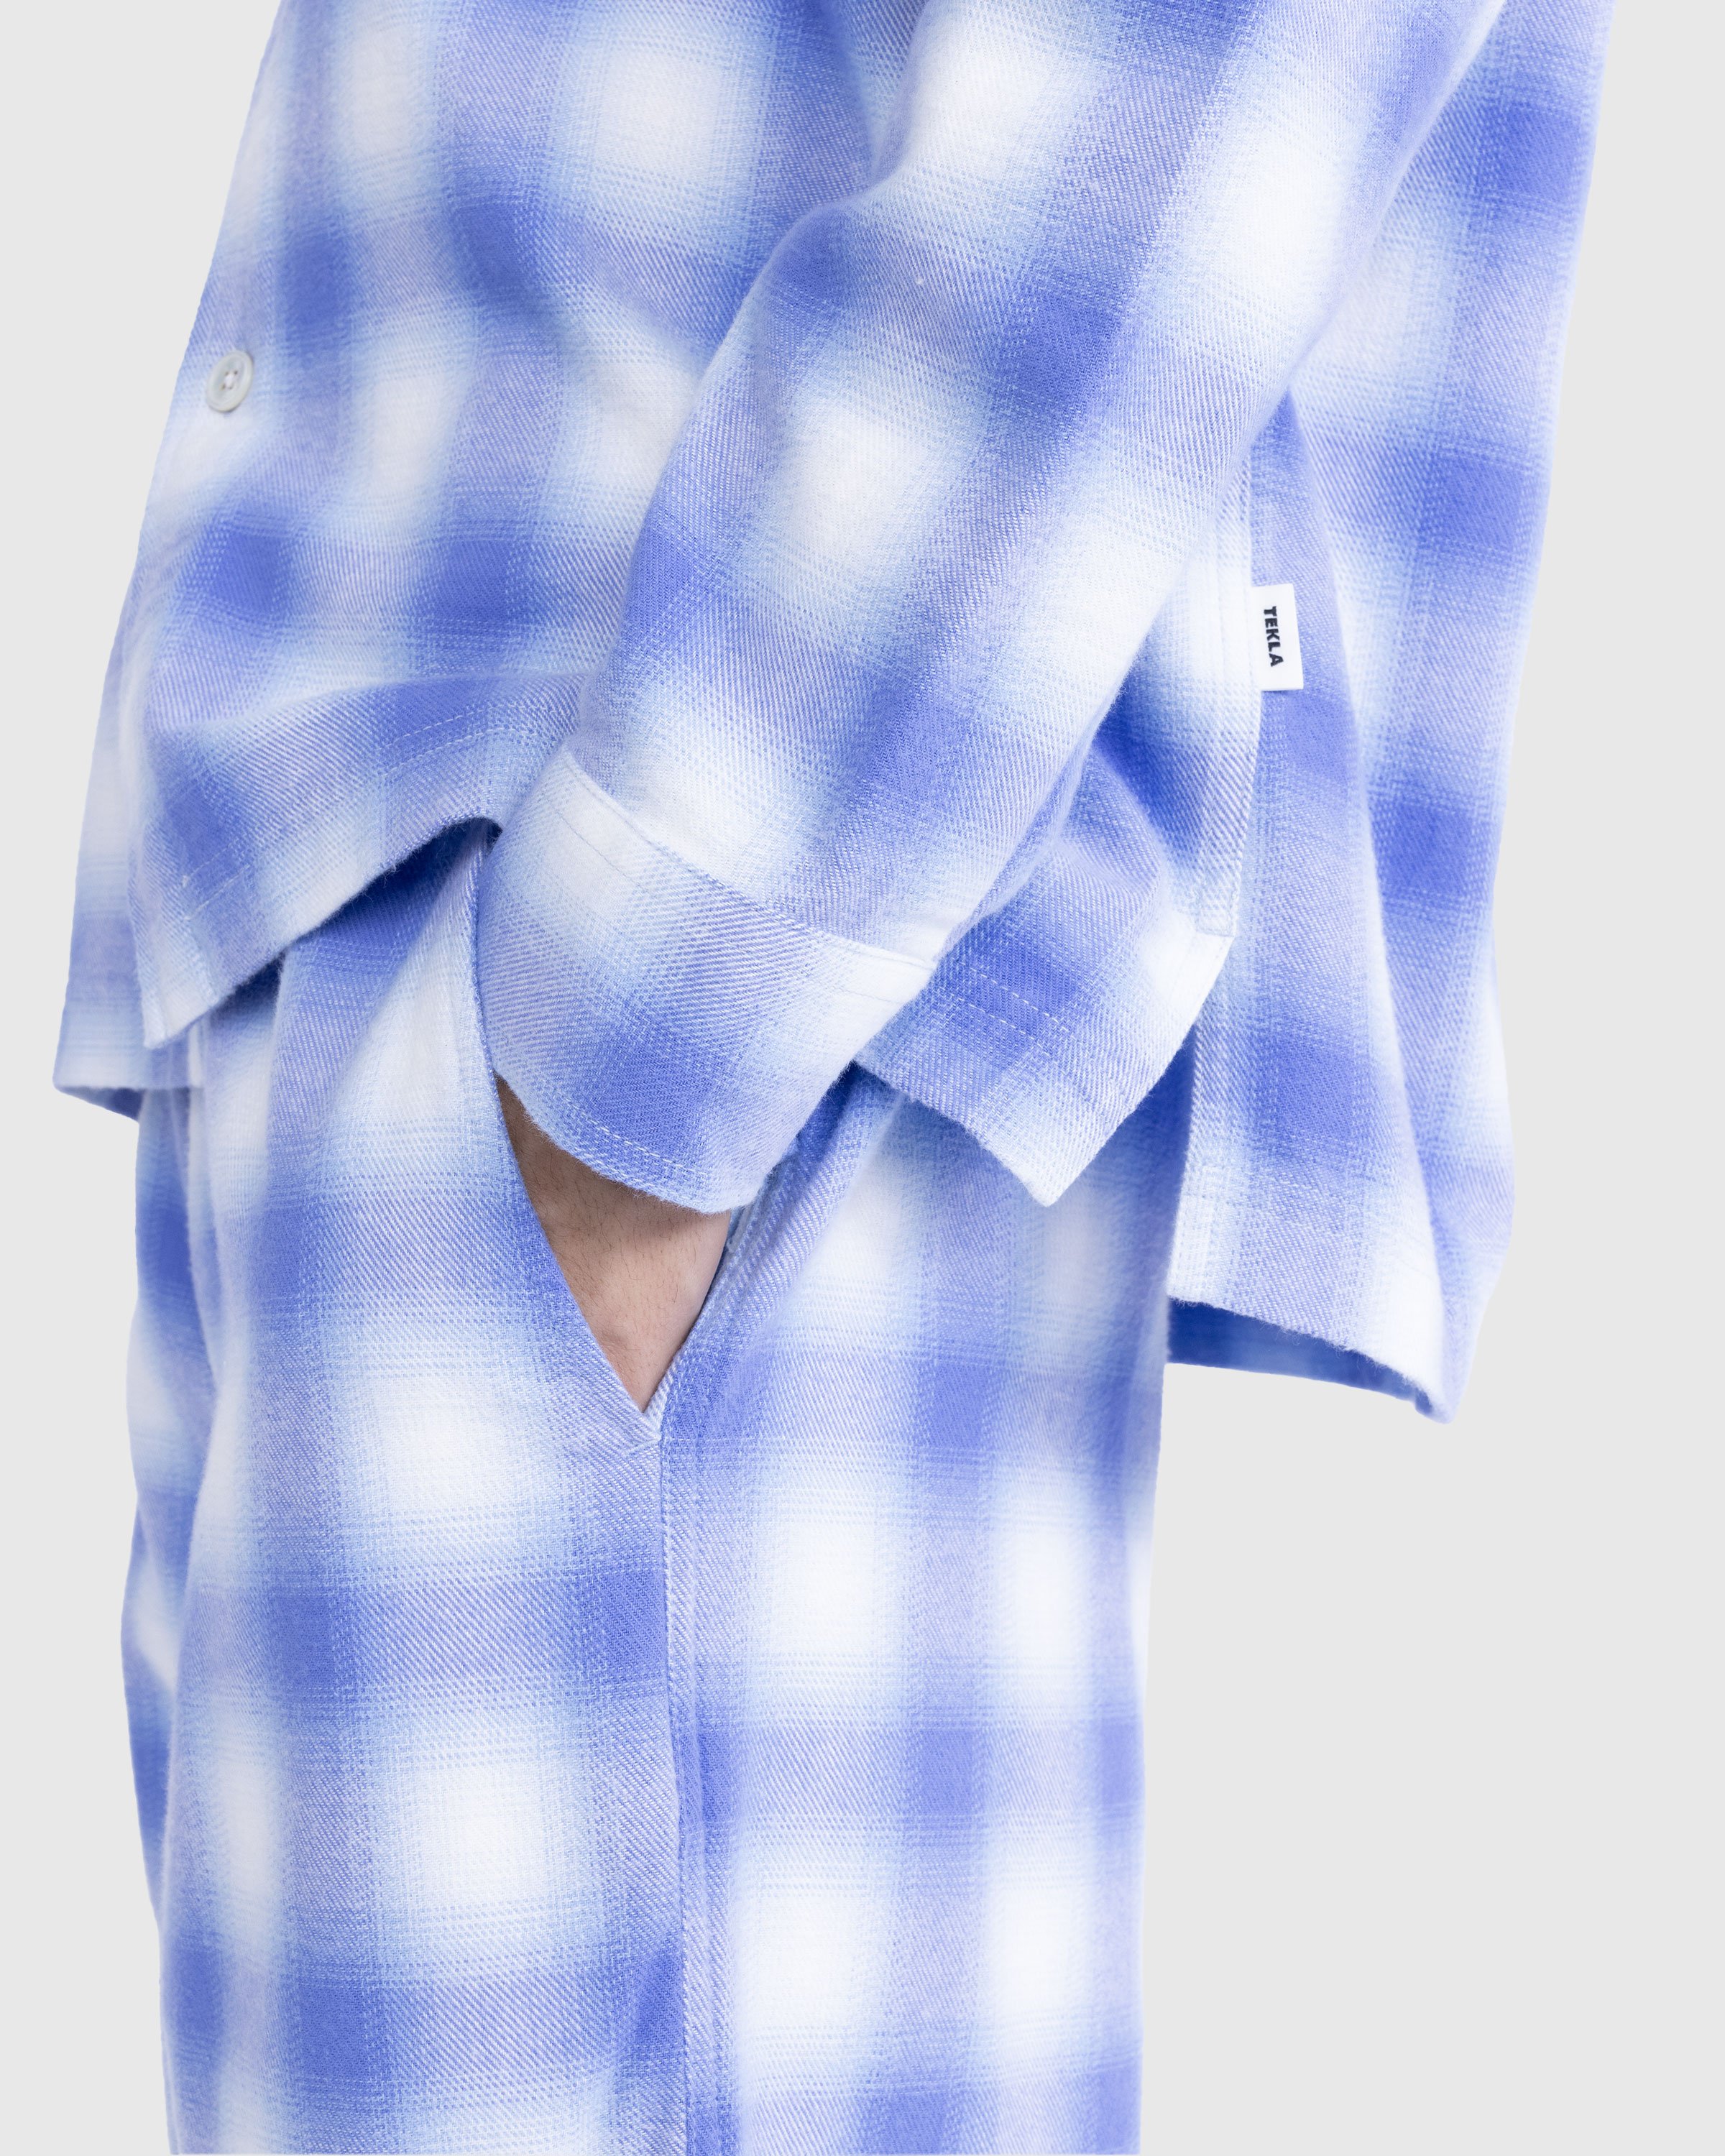 Tekla - Flannel Pyjamas Shirt Light Blue Plaid - Clothing - Blue - Image 4